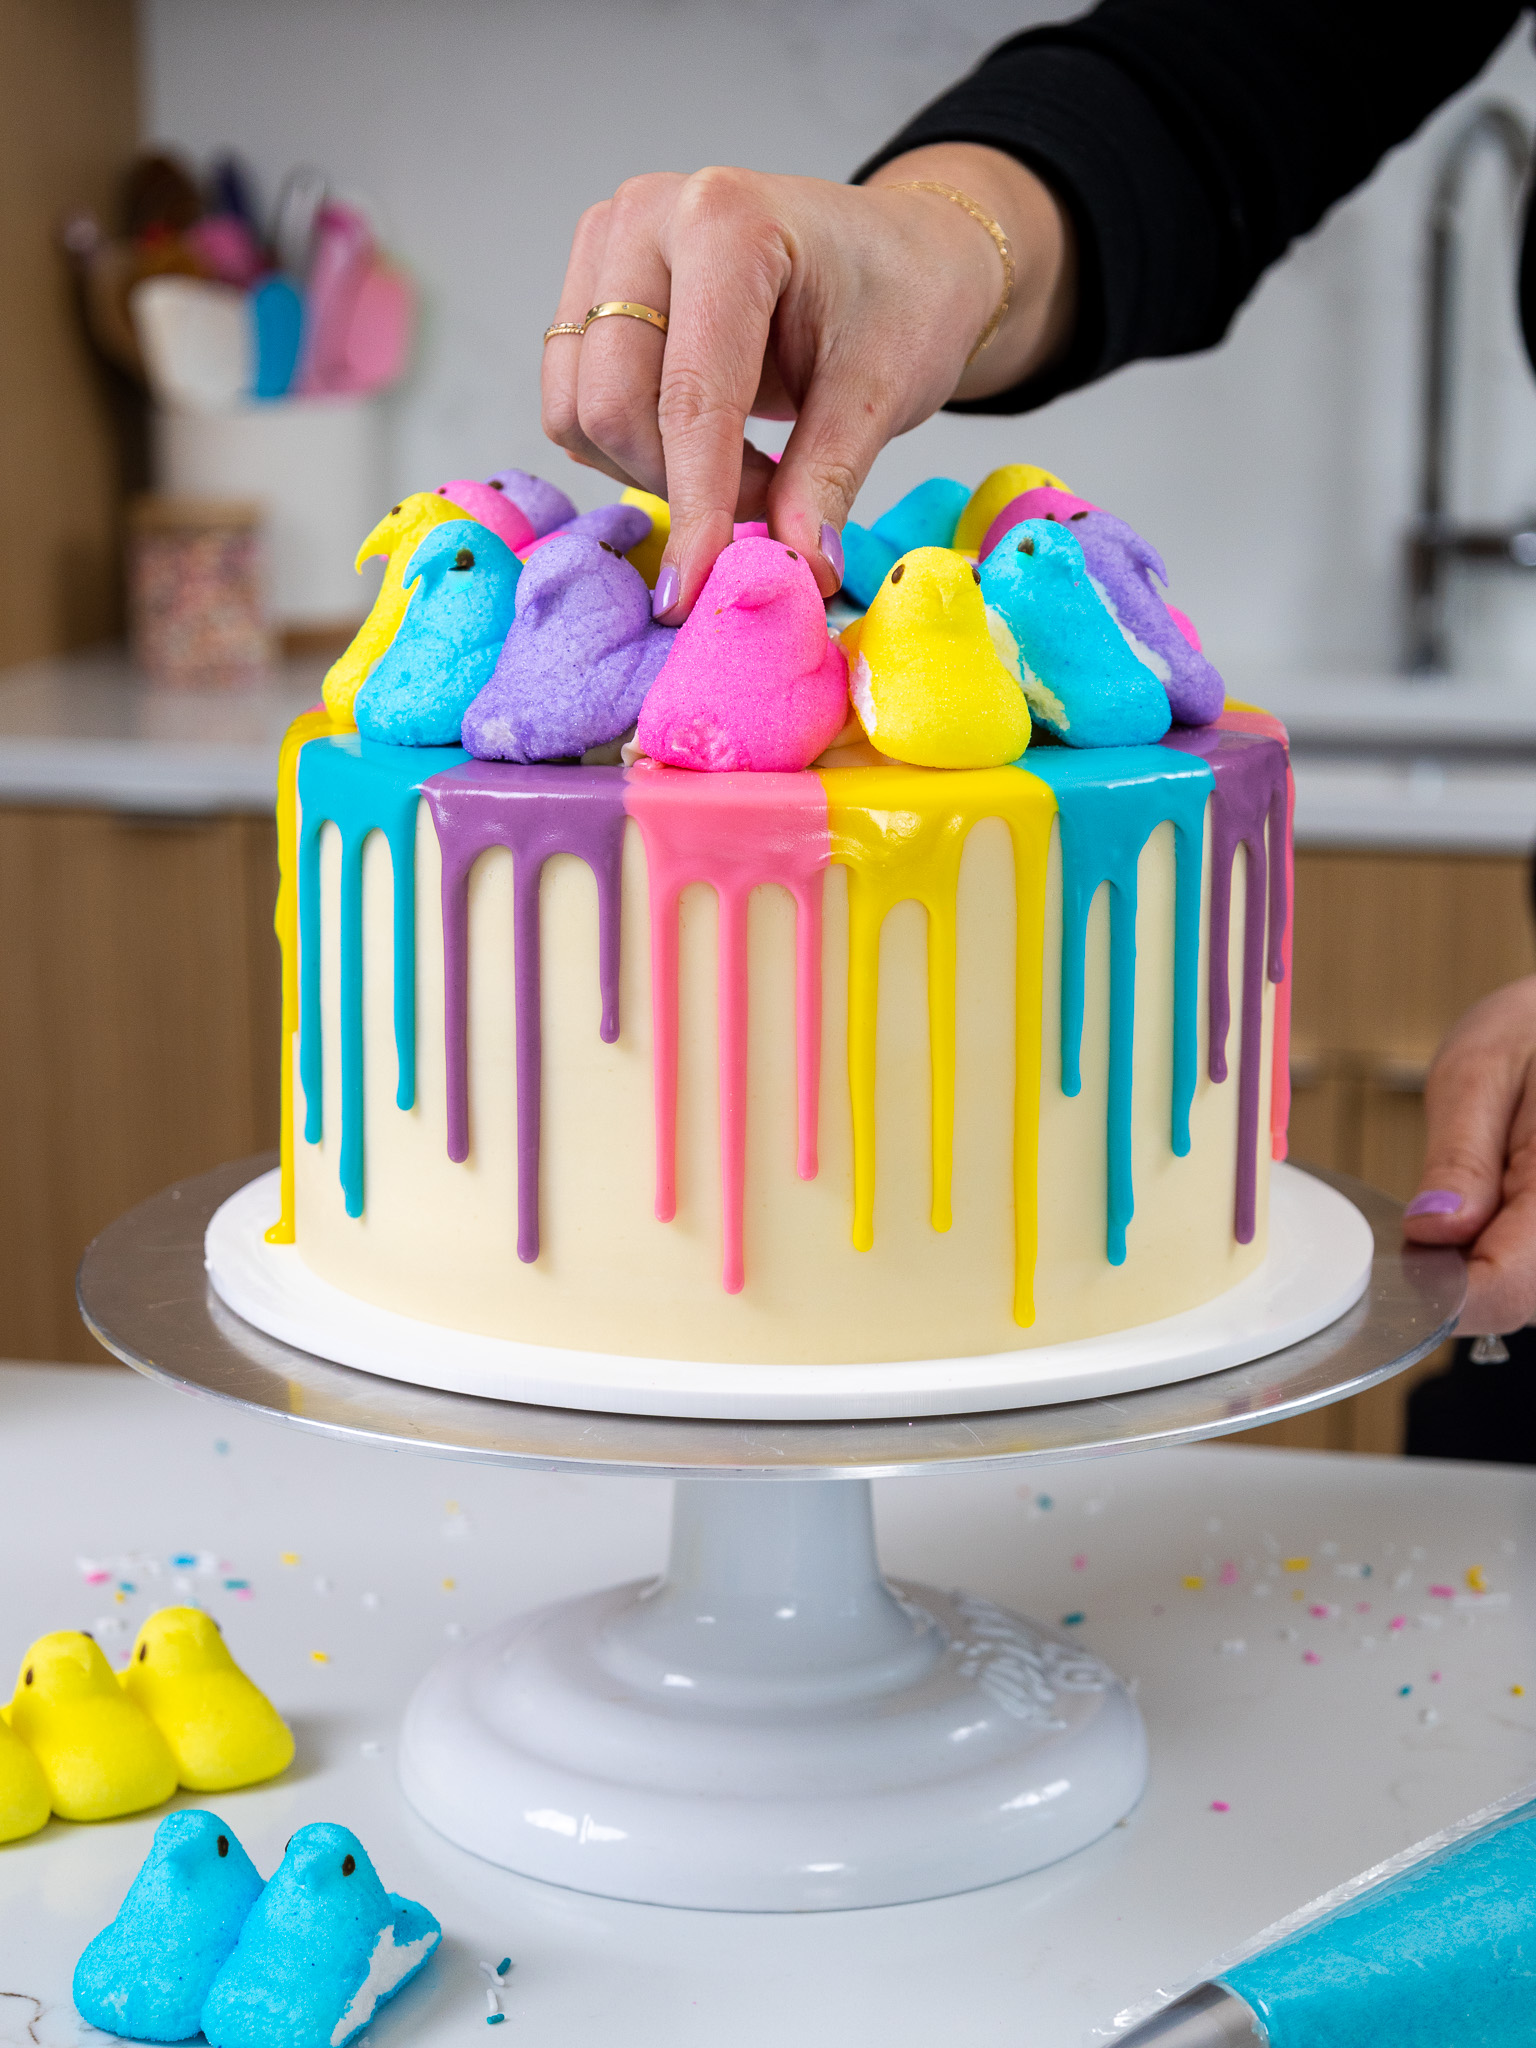 Peeps Cake - The Ultimate Easter Cake